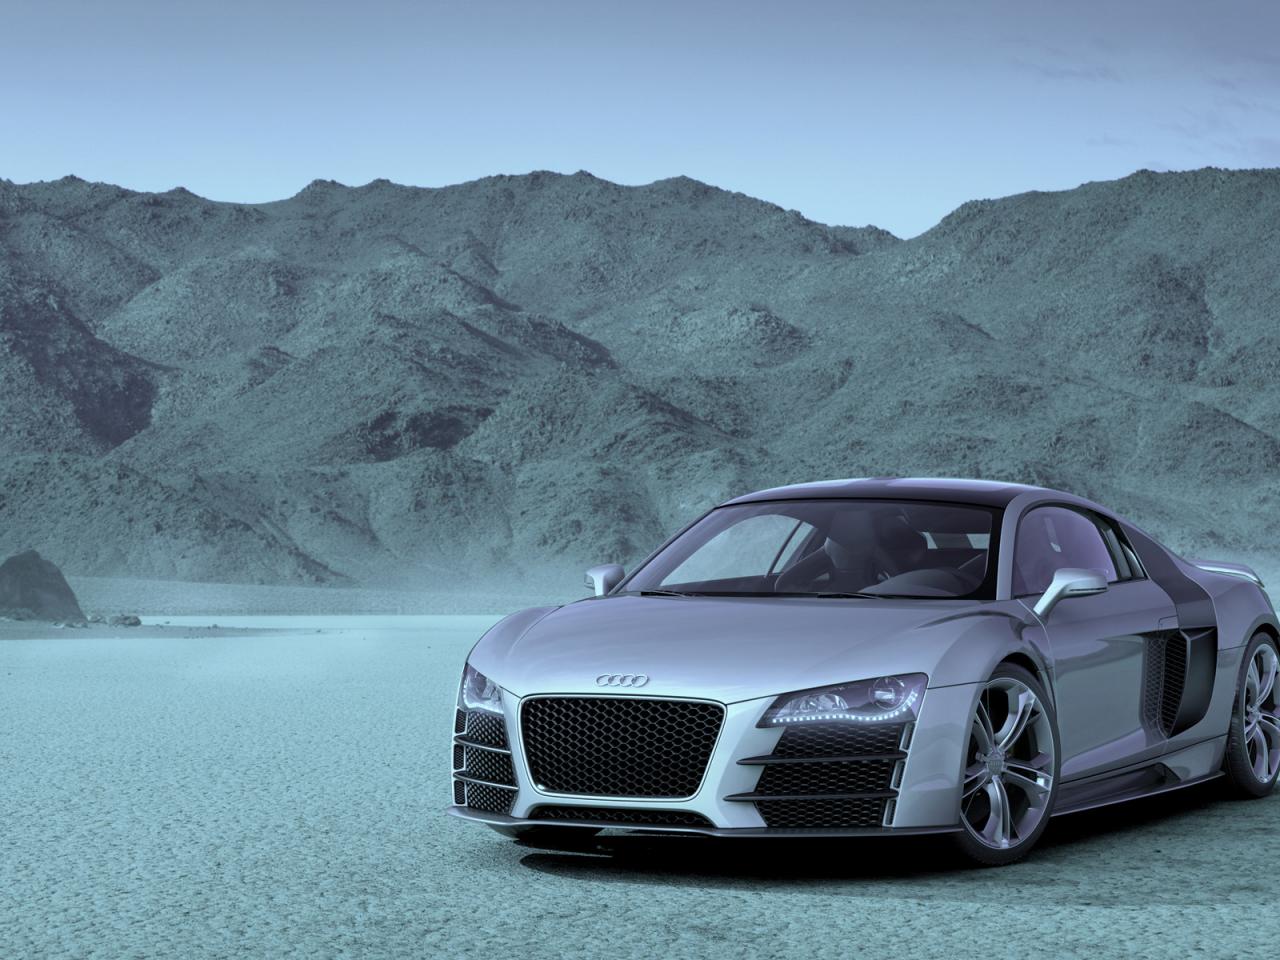 обои Audi r8 в пустыне фото